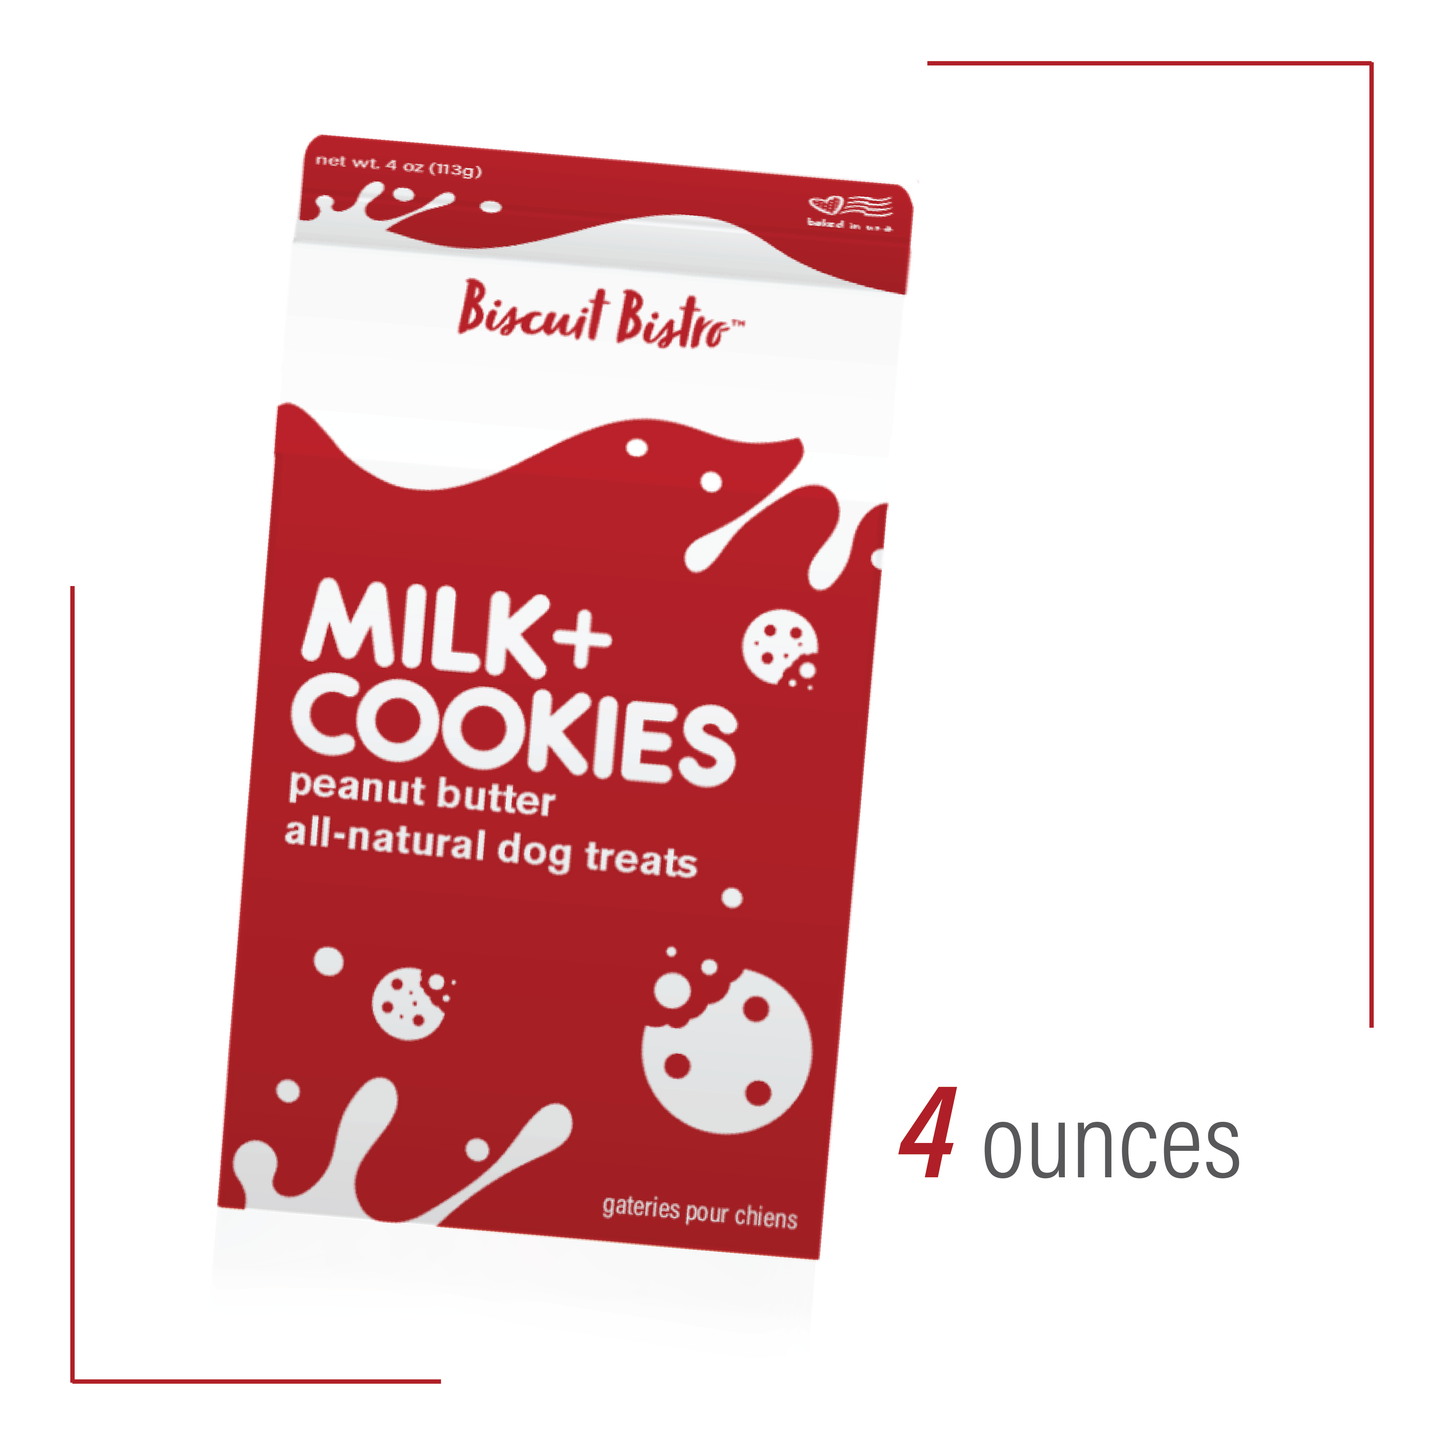 Milk + Cookies - Peanut Butter Dog Treats - 4 oz